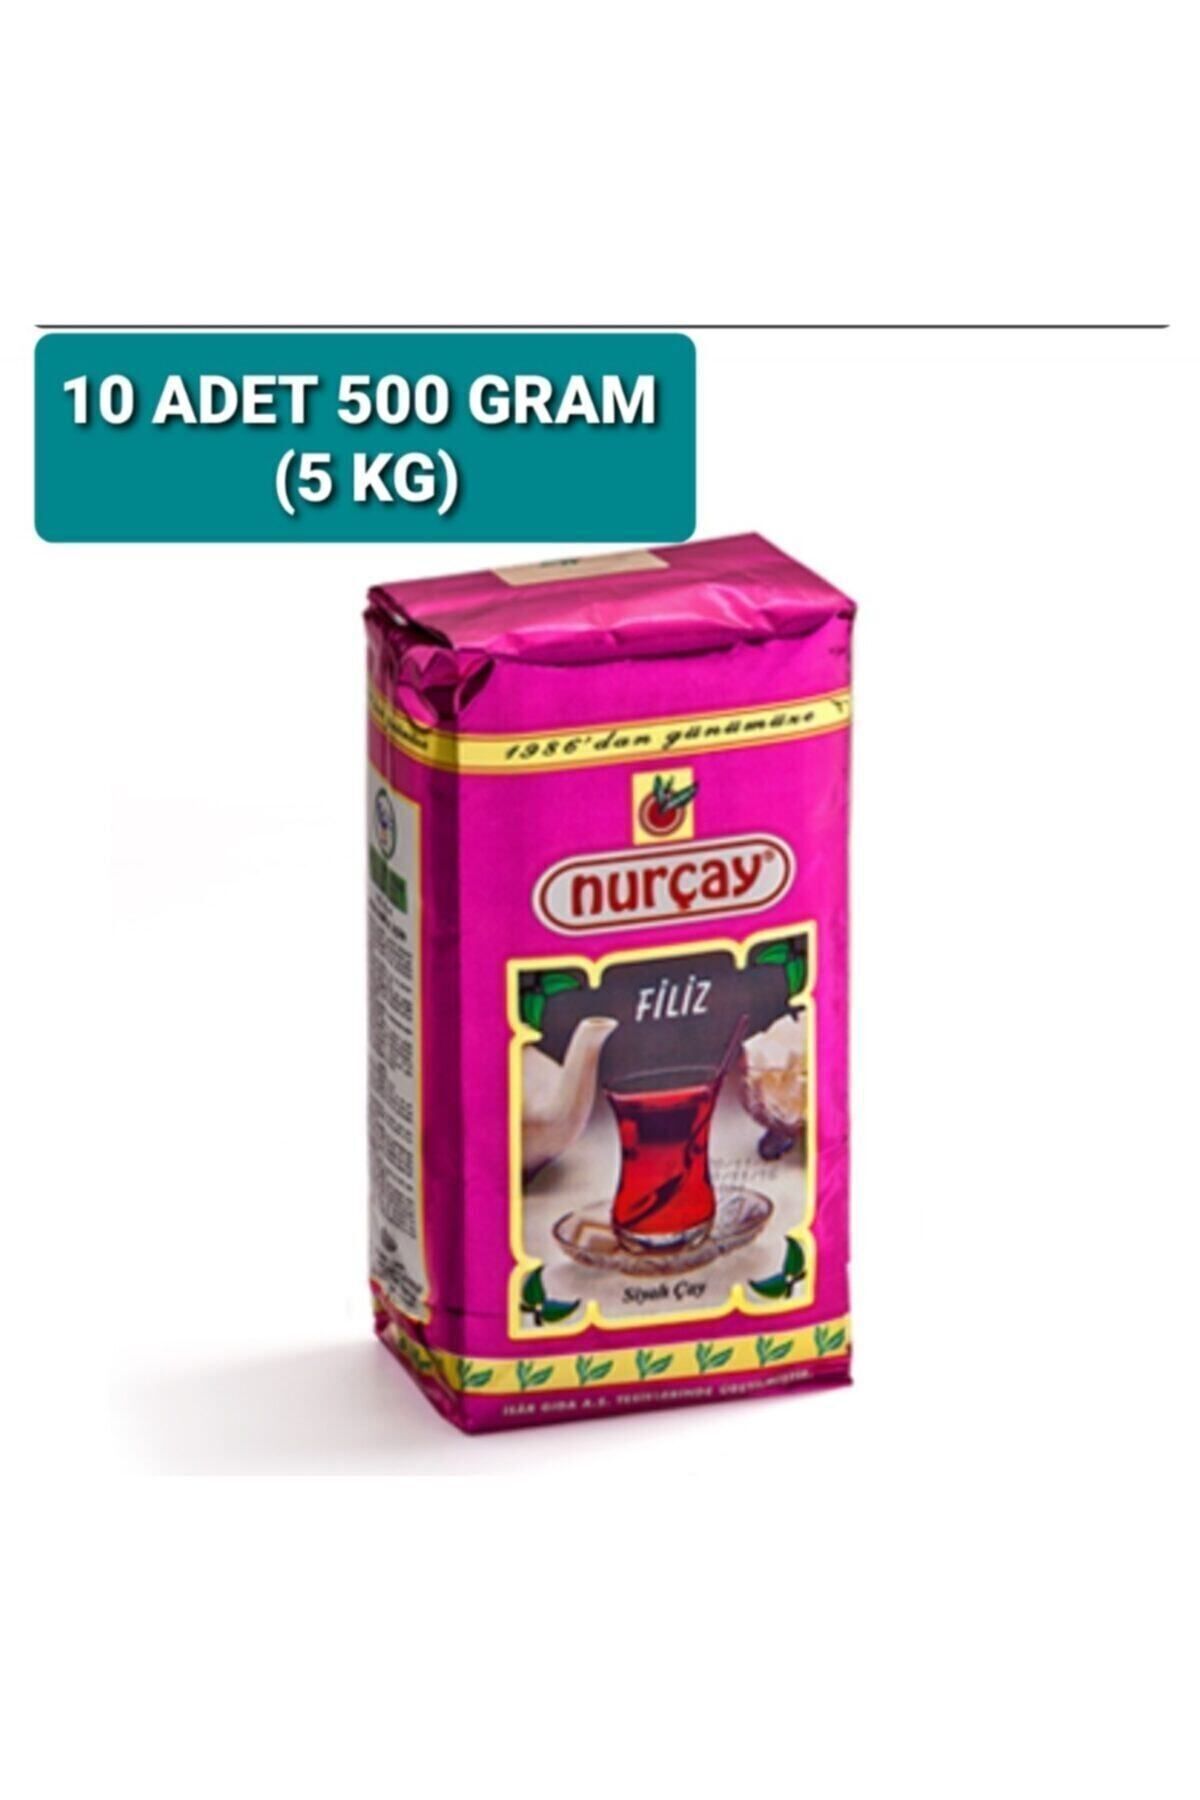 Nurçay Filiz Çay 500g X 10 Adet